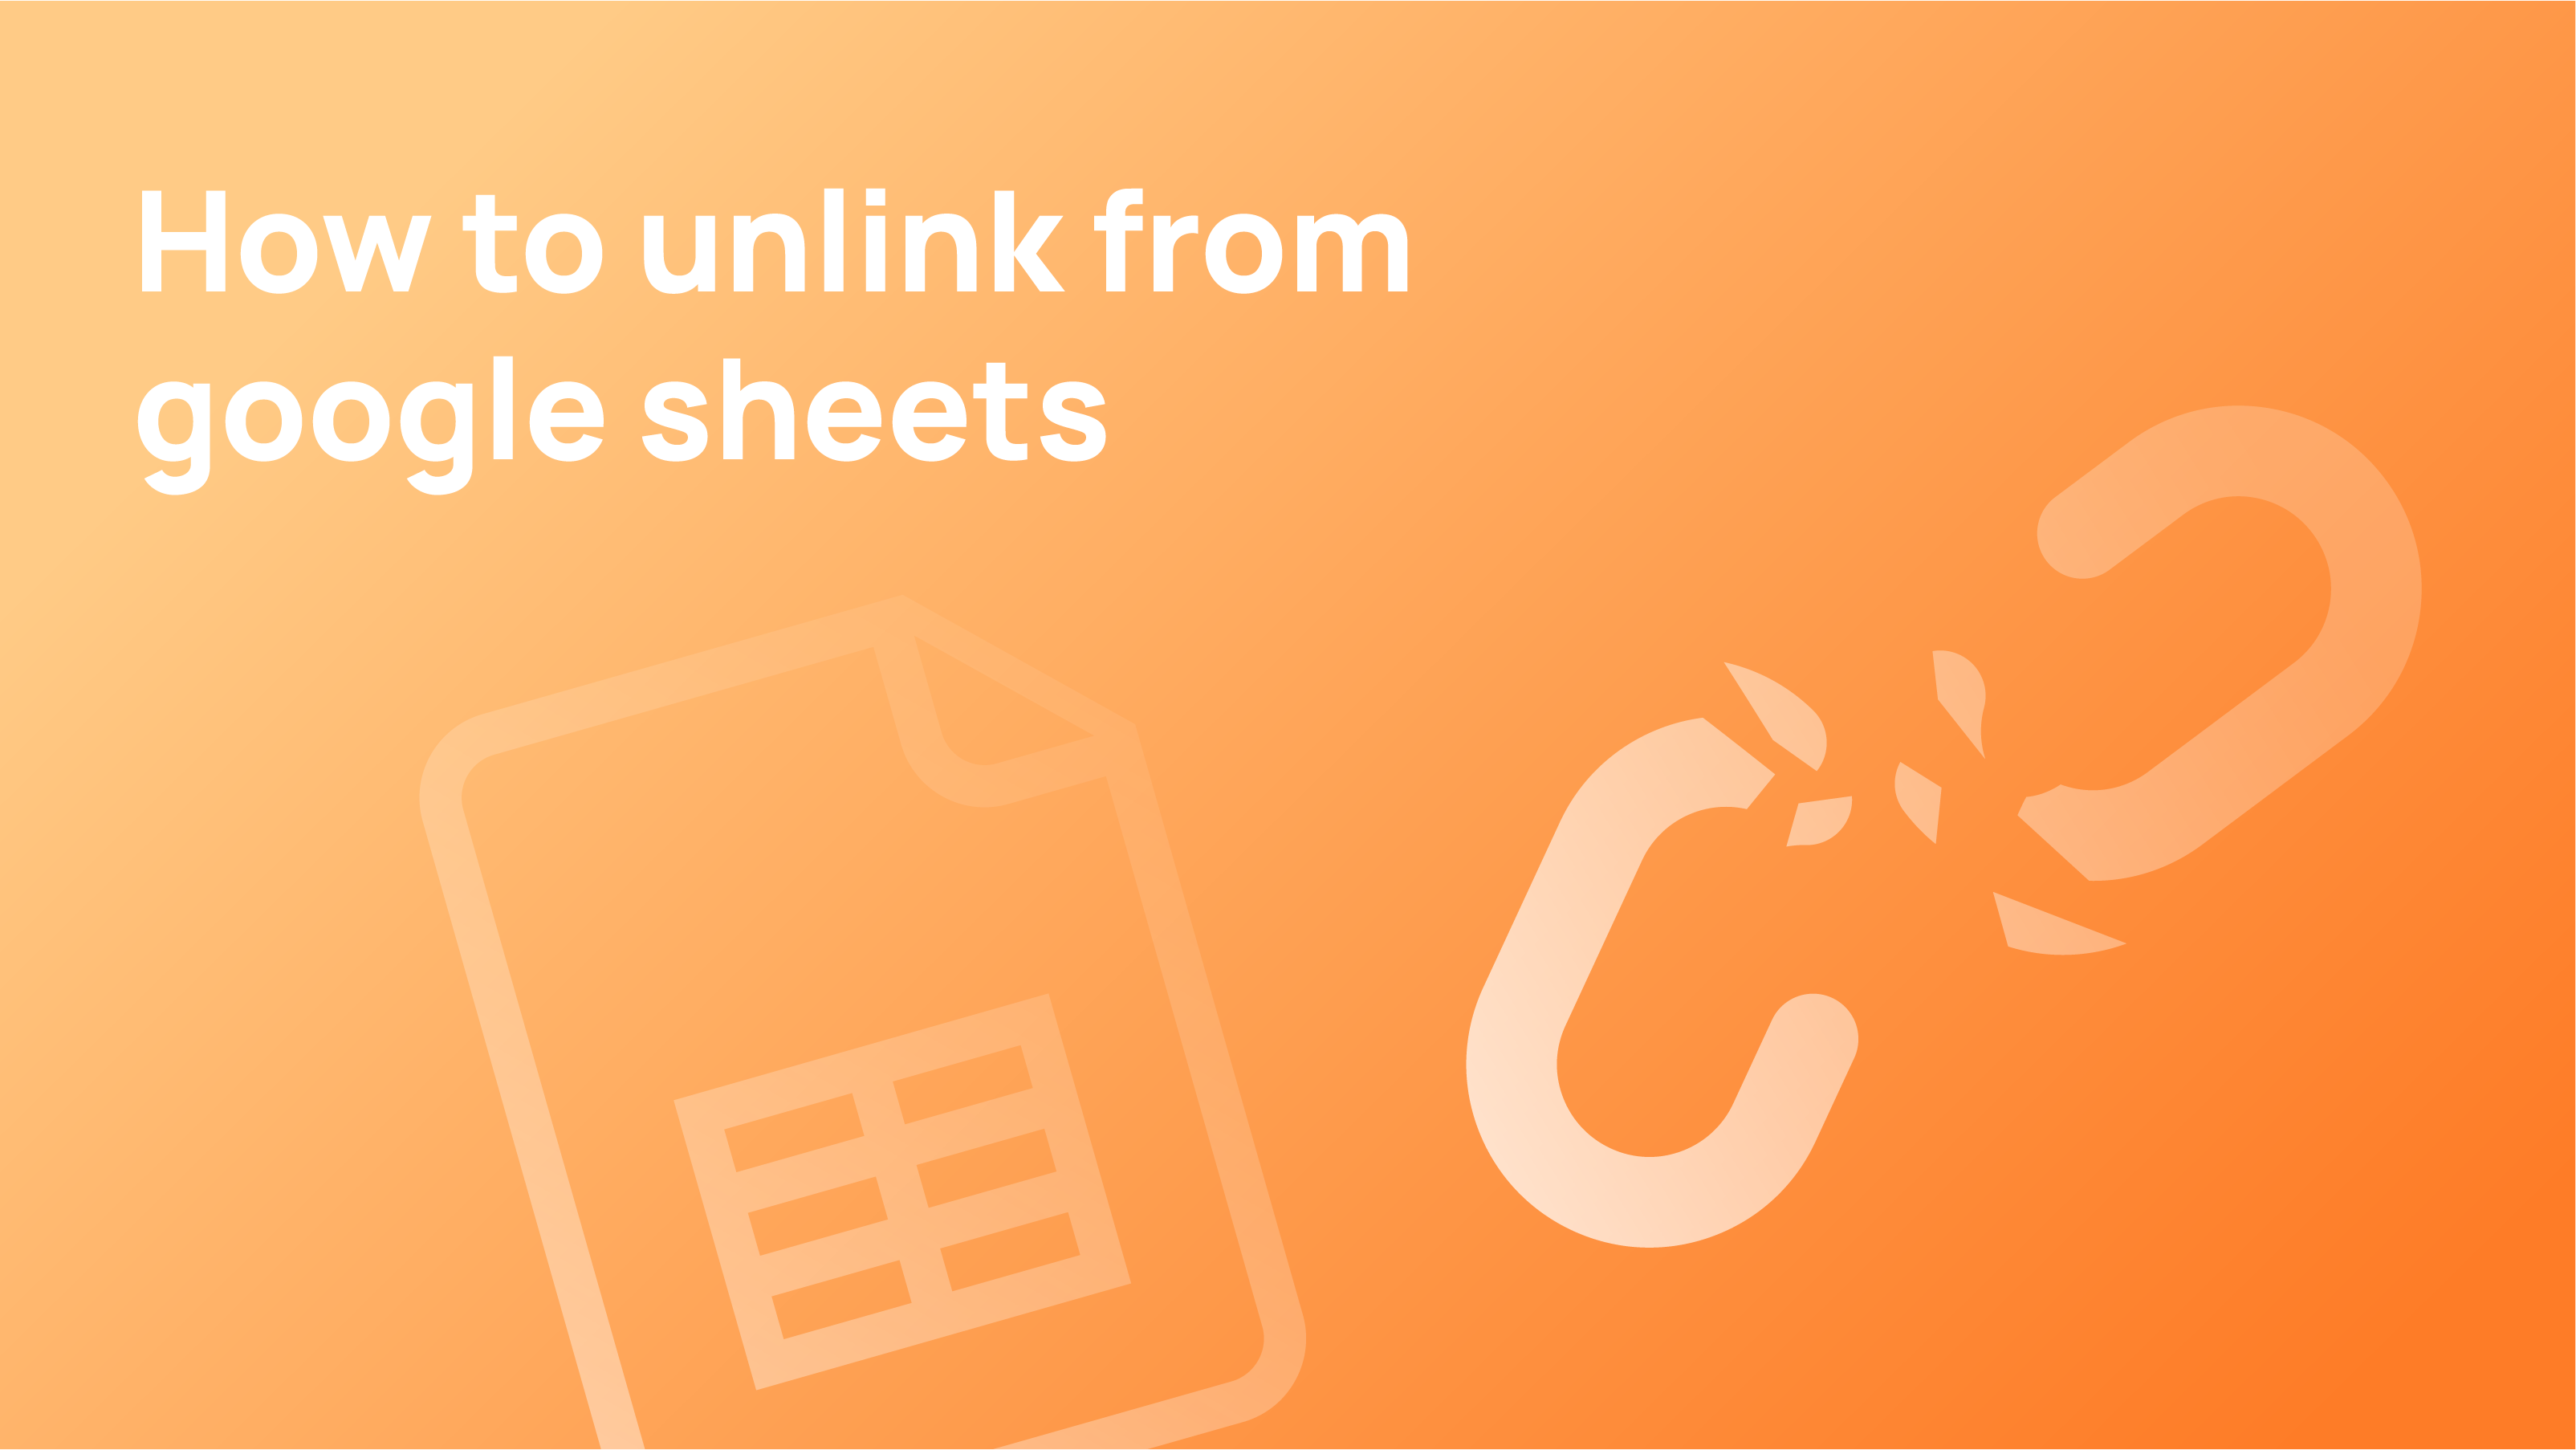 Unlink Form Google Sheets